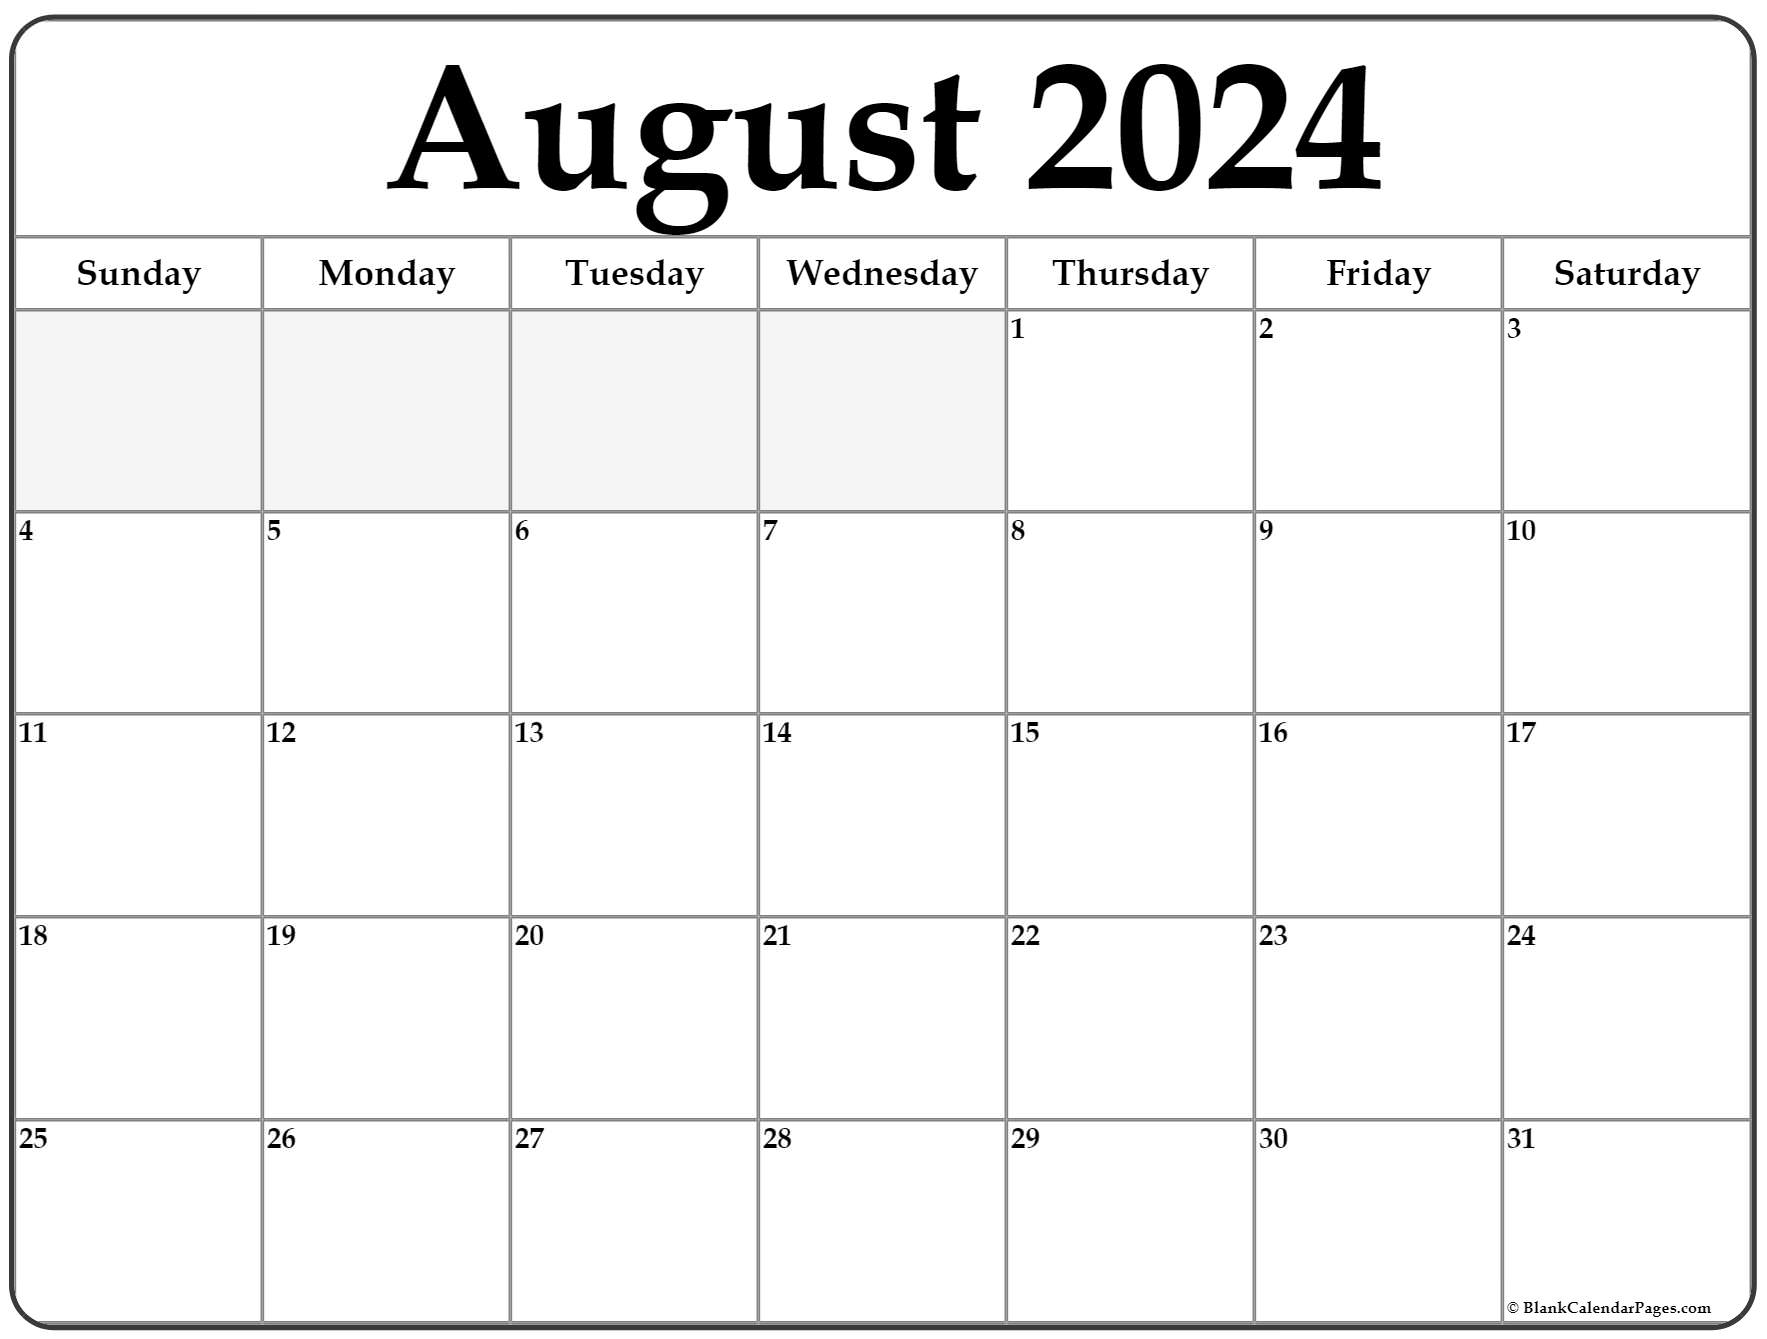 Free August 2022 Calendar August 2022 Calendar | Free Printable Calendar Templates